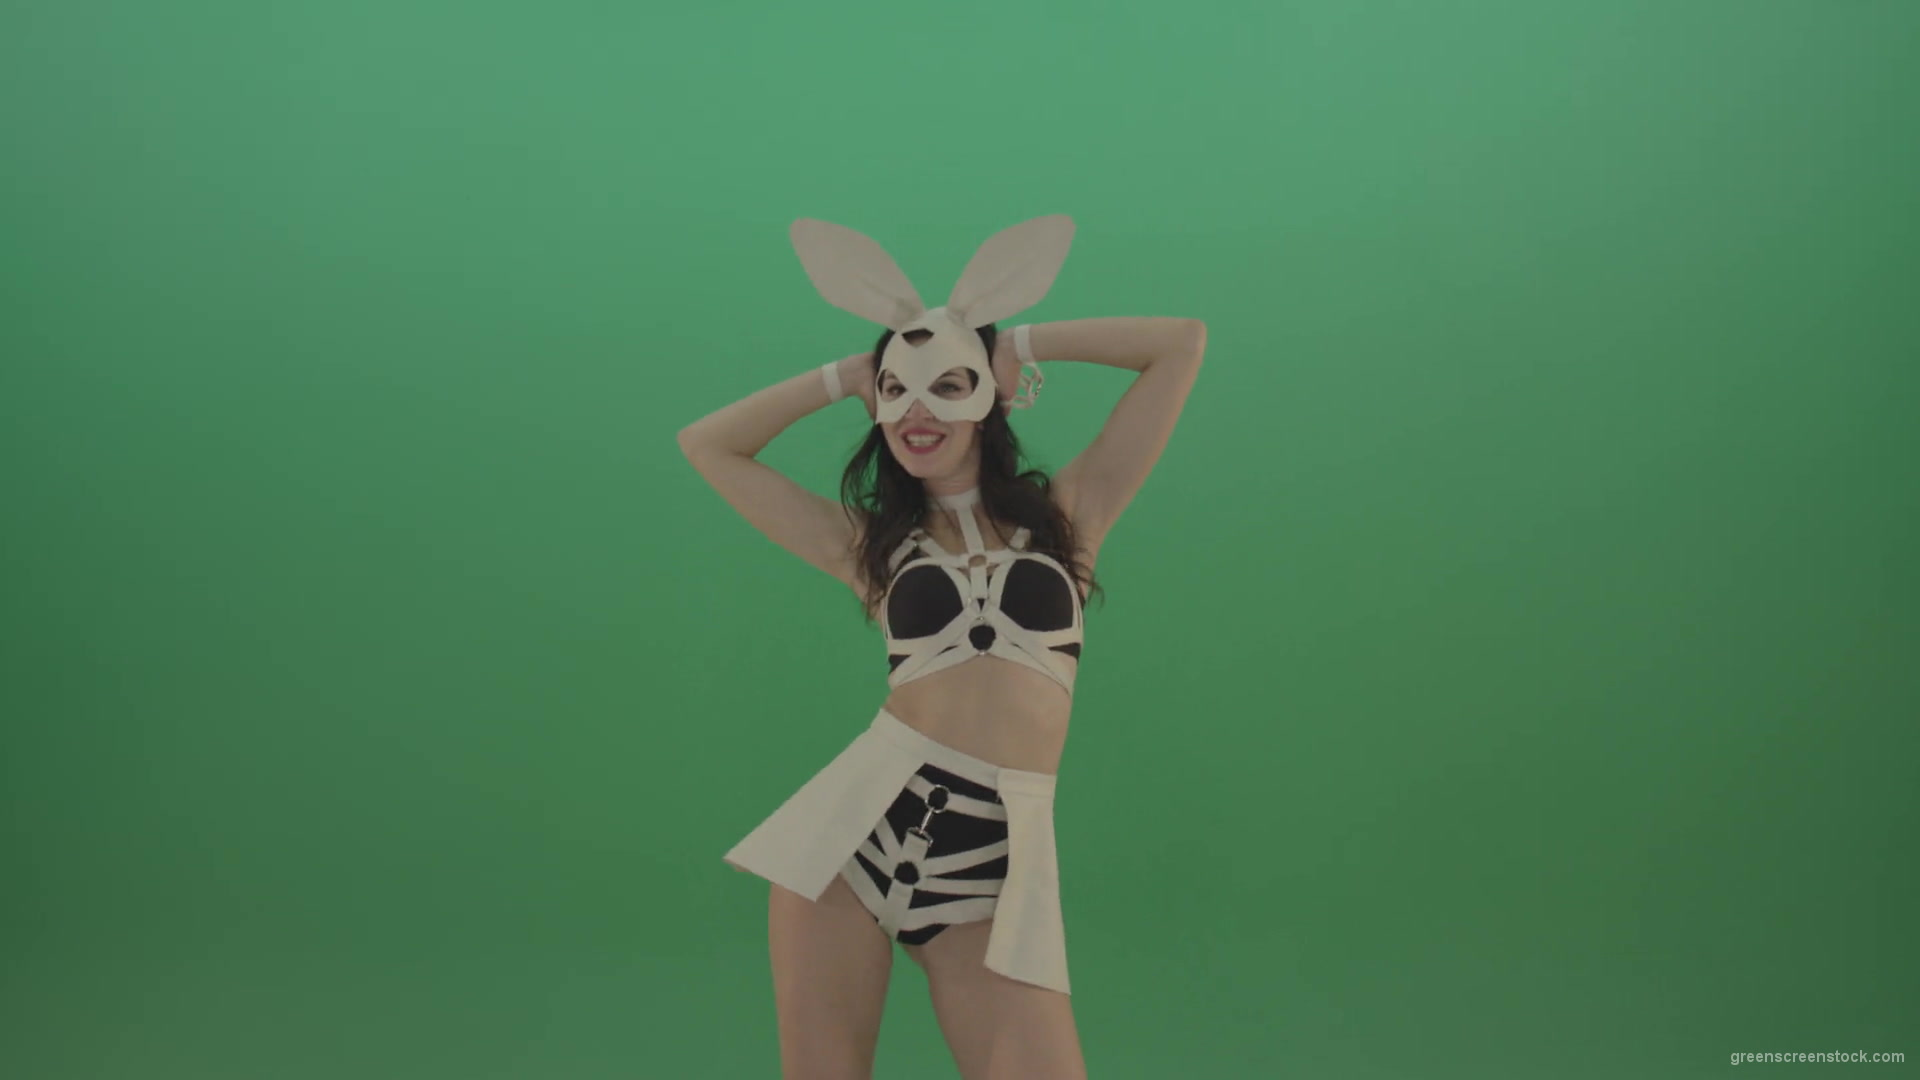 White-Rabbit-Girl-sexy-posing-dancing-in-bunny-style-over-Green-Screen-1920_004 Green Screen Stock